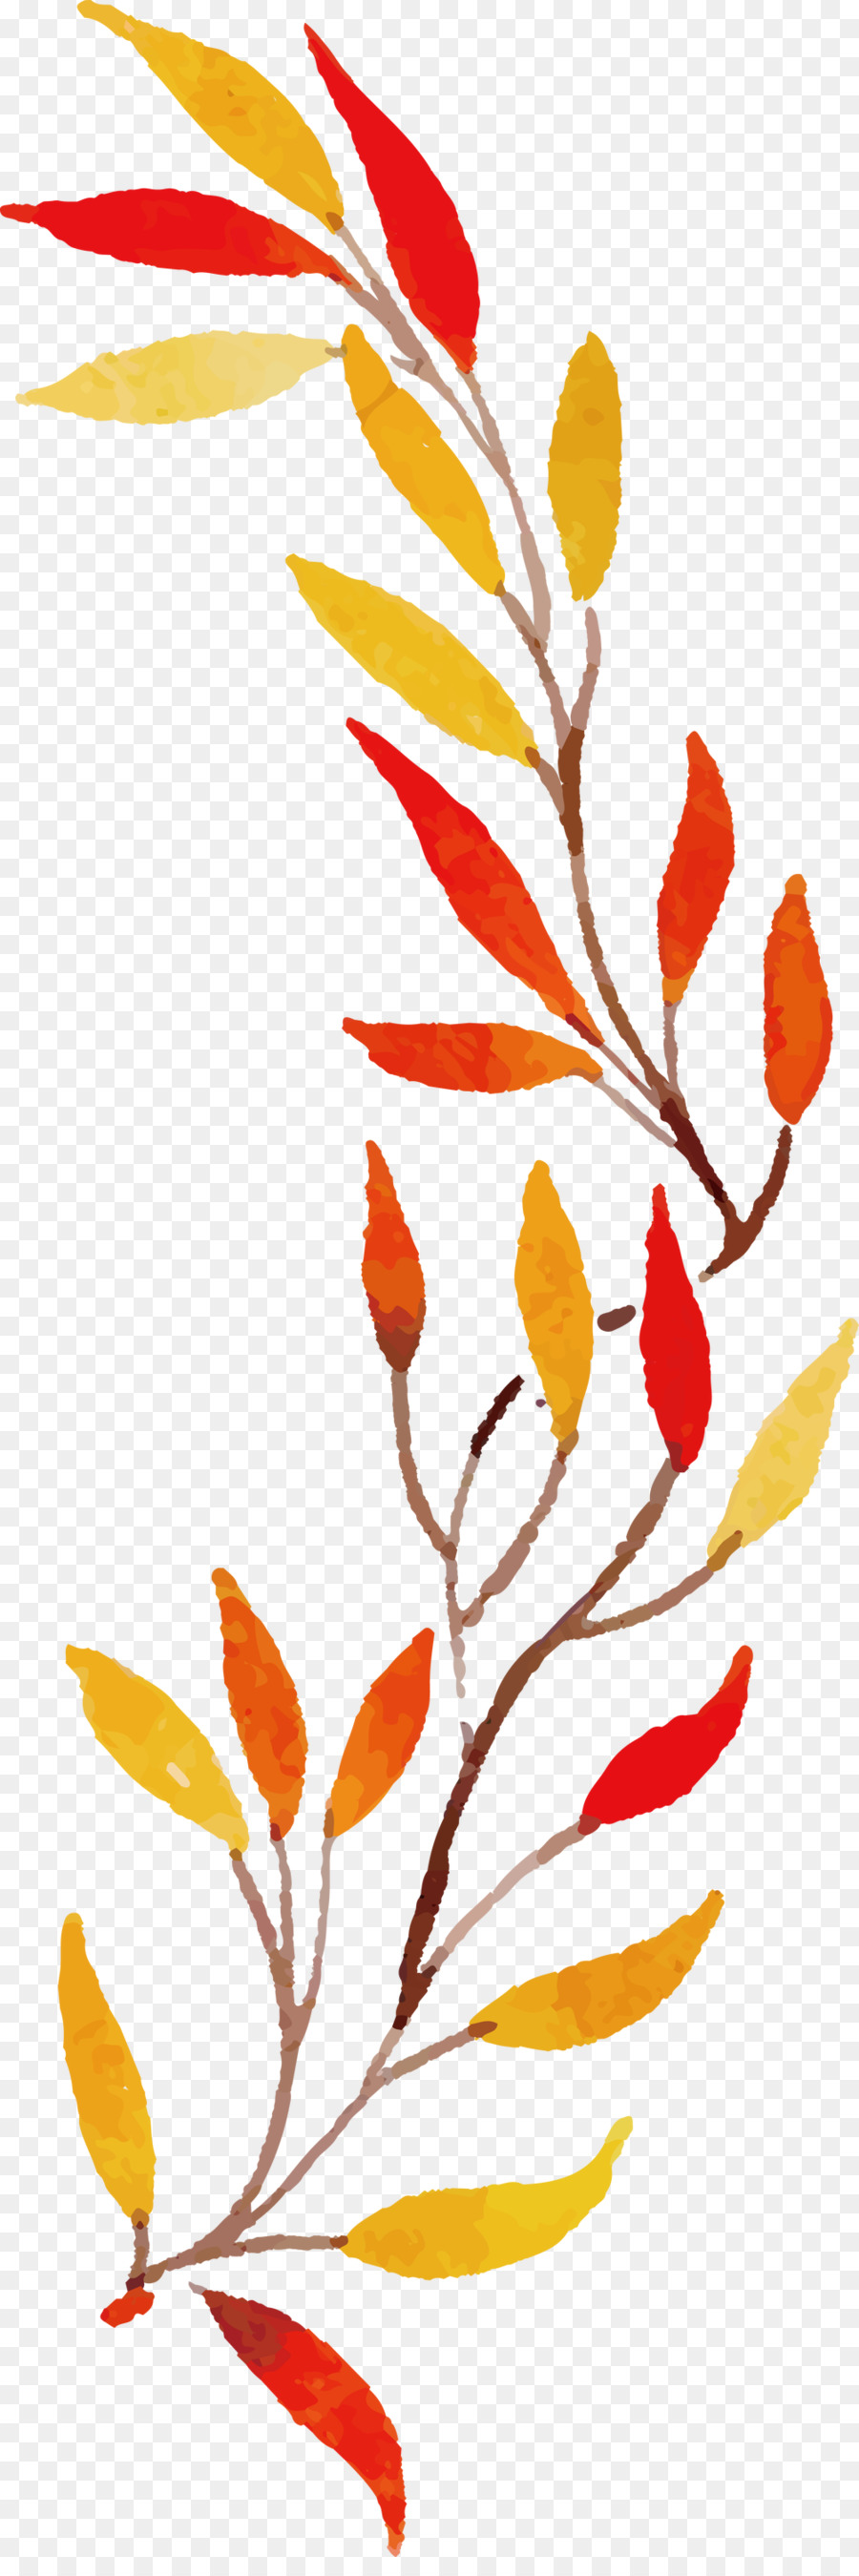 Autumn Leaf colorful leaf